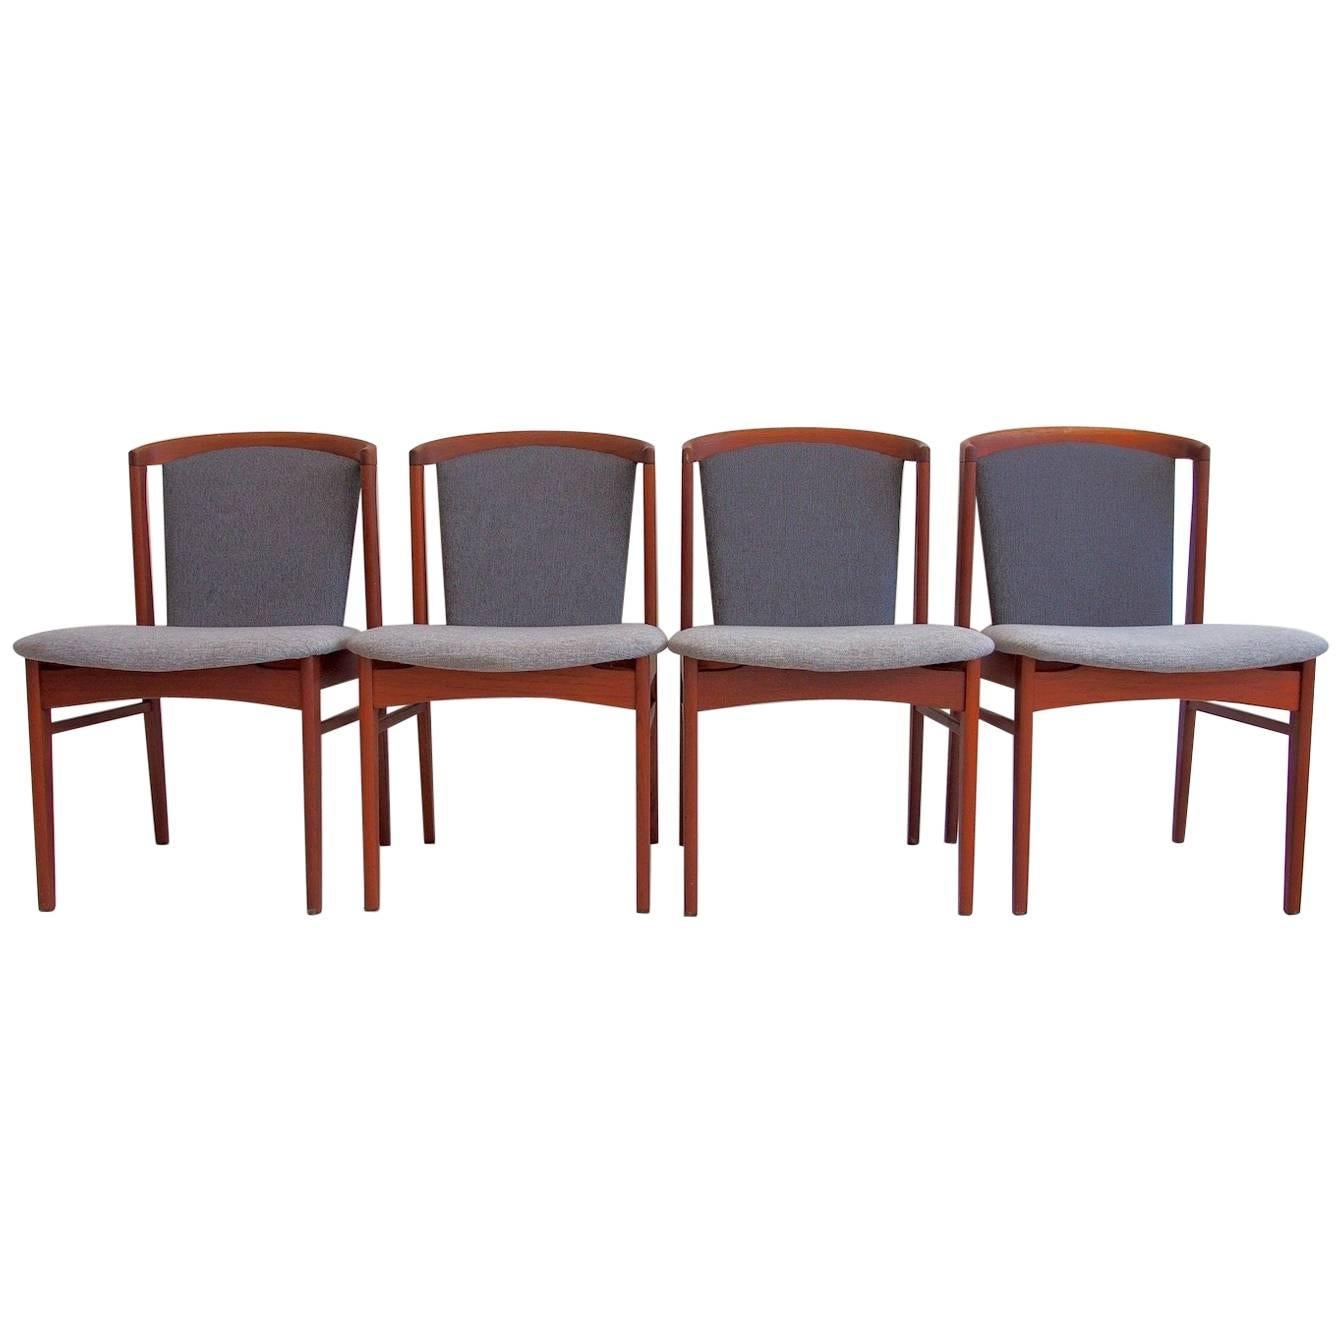 Four Teak Dining Chairs Designed by Erik Buch for Christensens Mobelfabrik